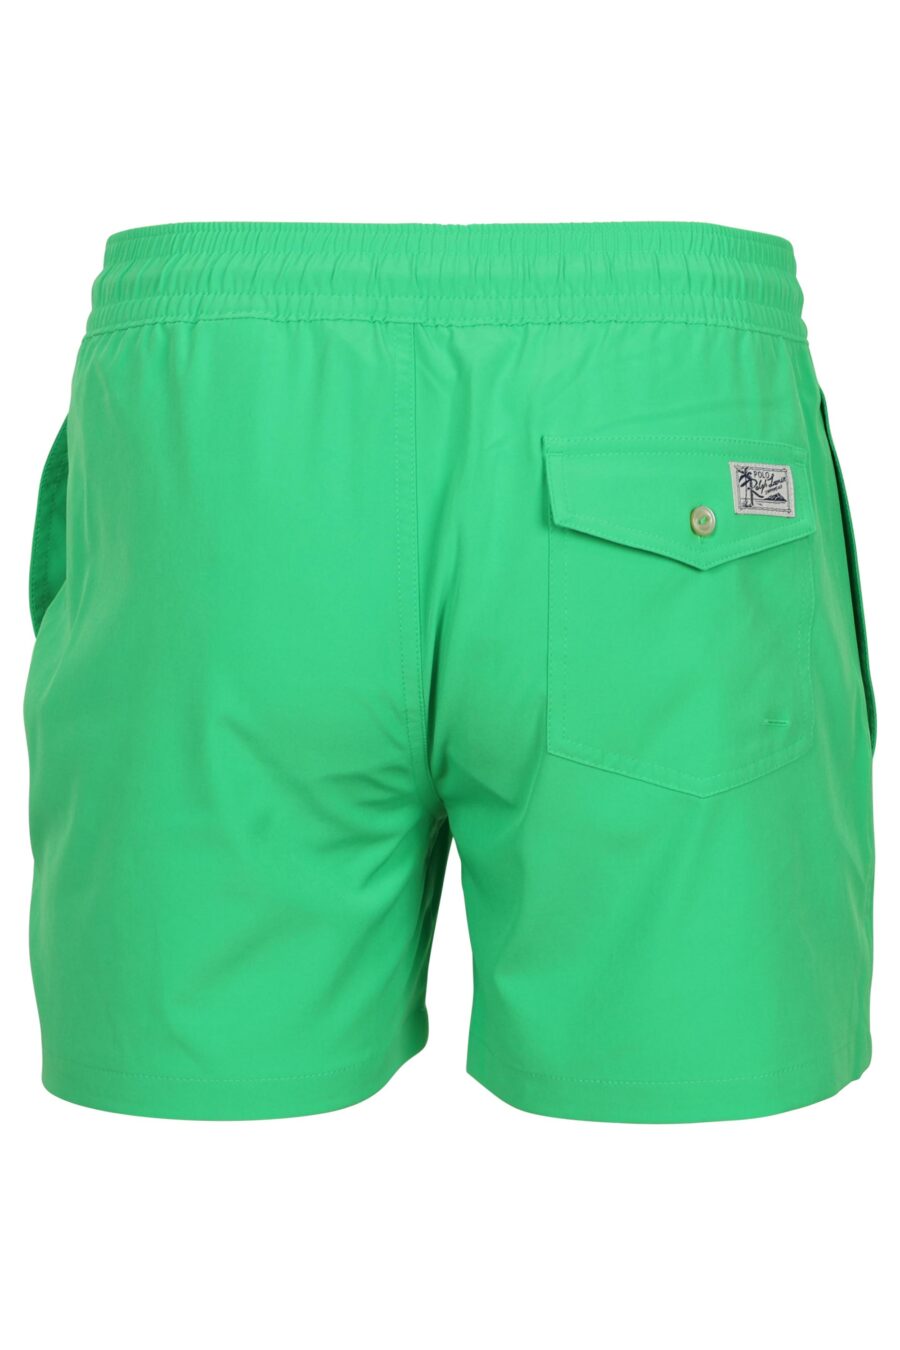 Grüne Shorts mit Mini-Logo "Polo" - 3616535968080 1